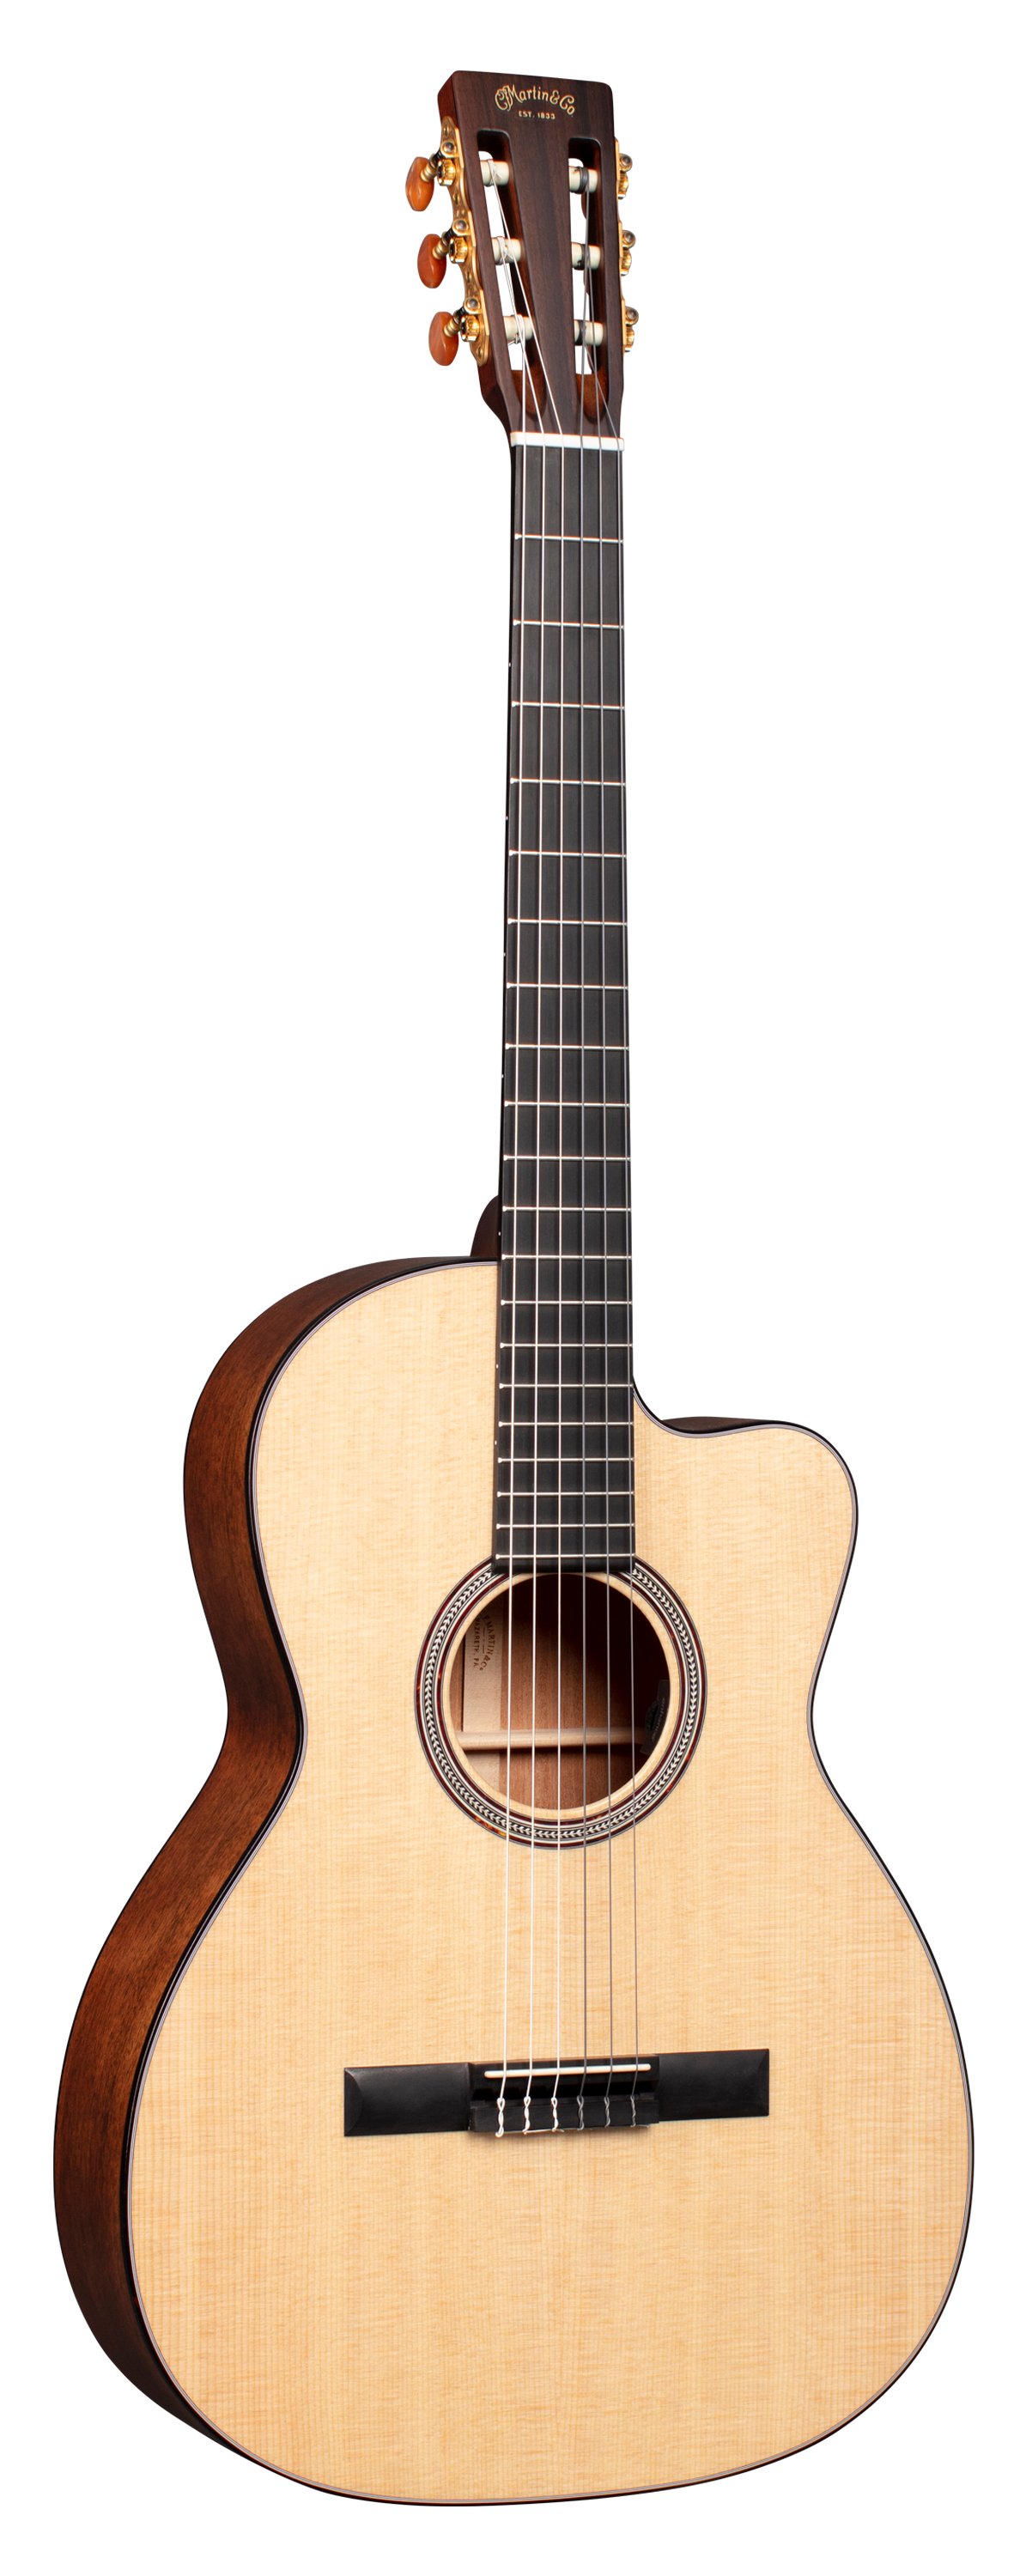 000C12-16E Nylon | 16-17 Series | Martin Guitar